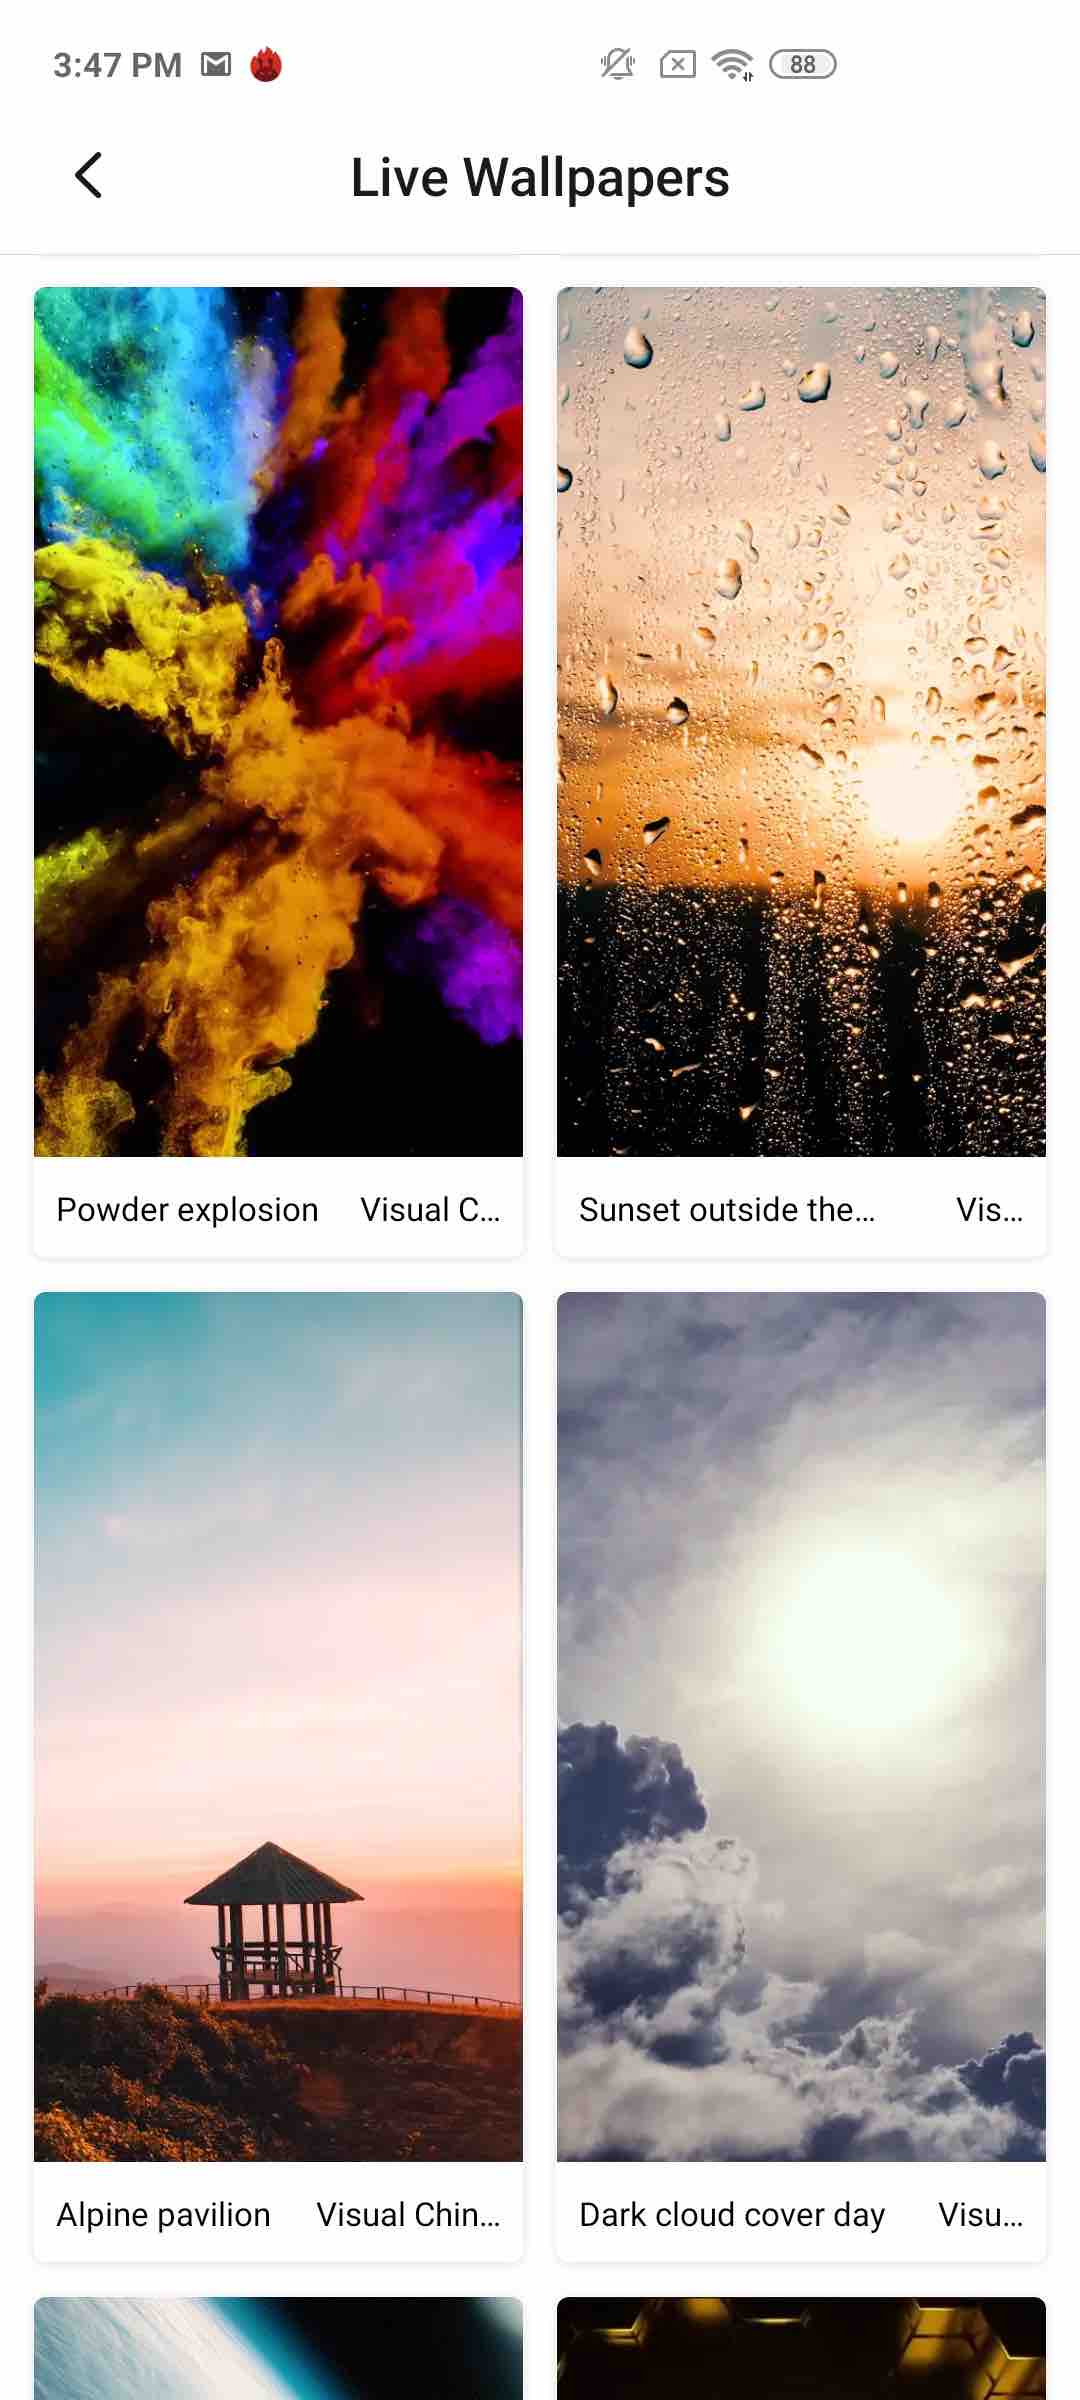 MIUI video wallpaper themes app